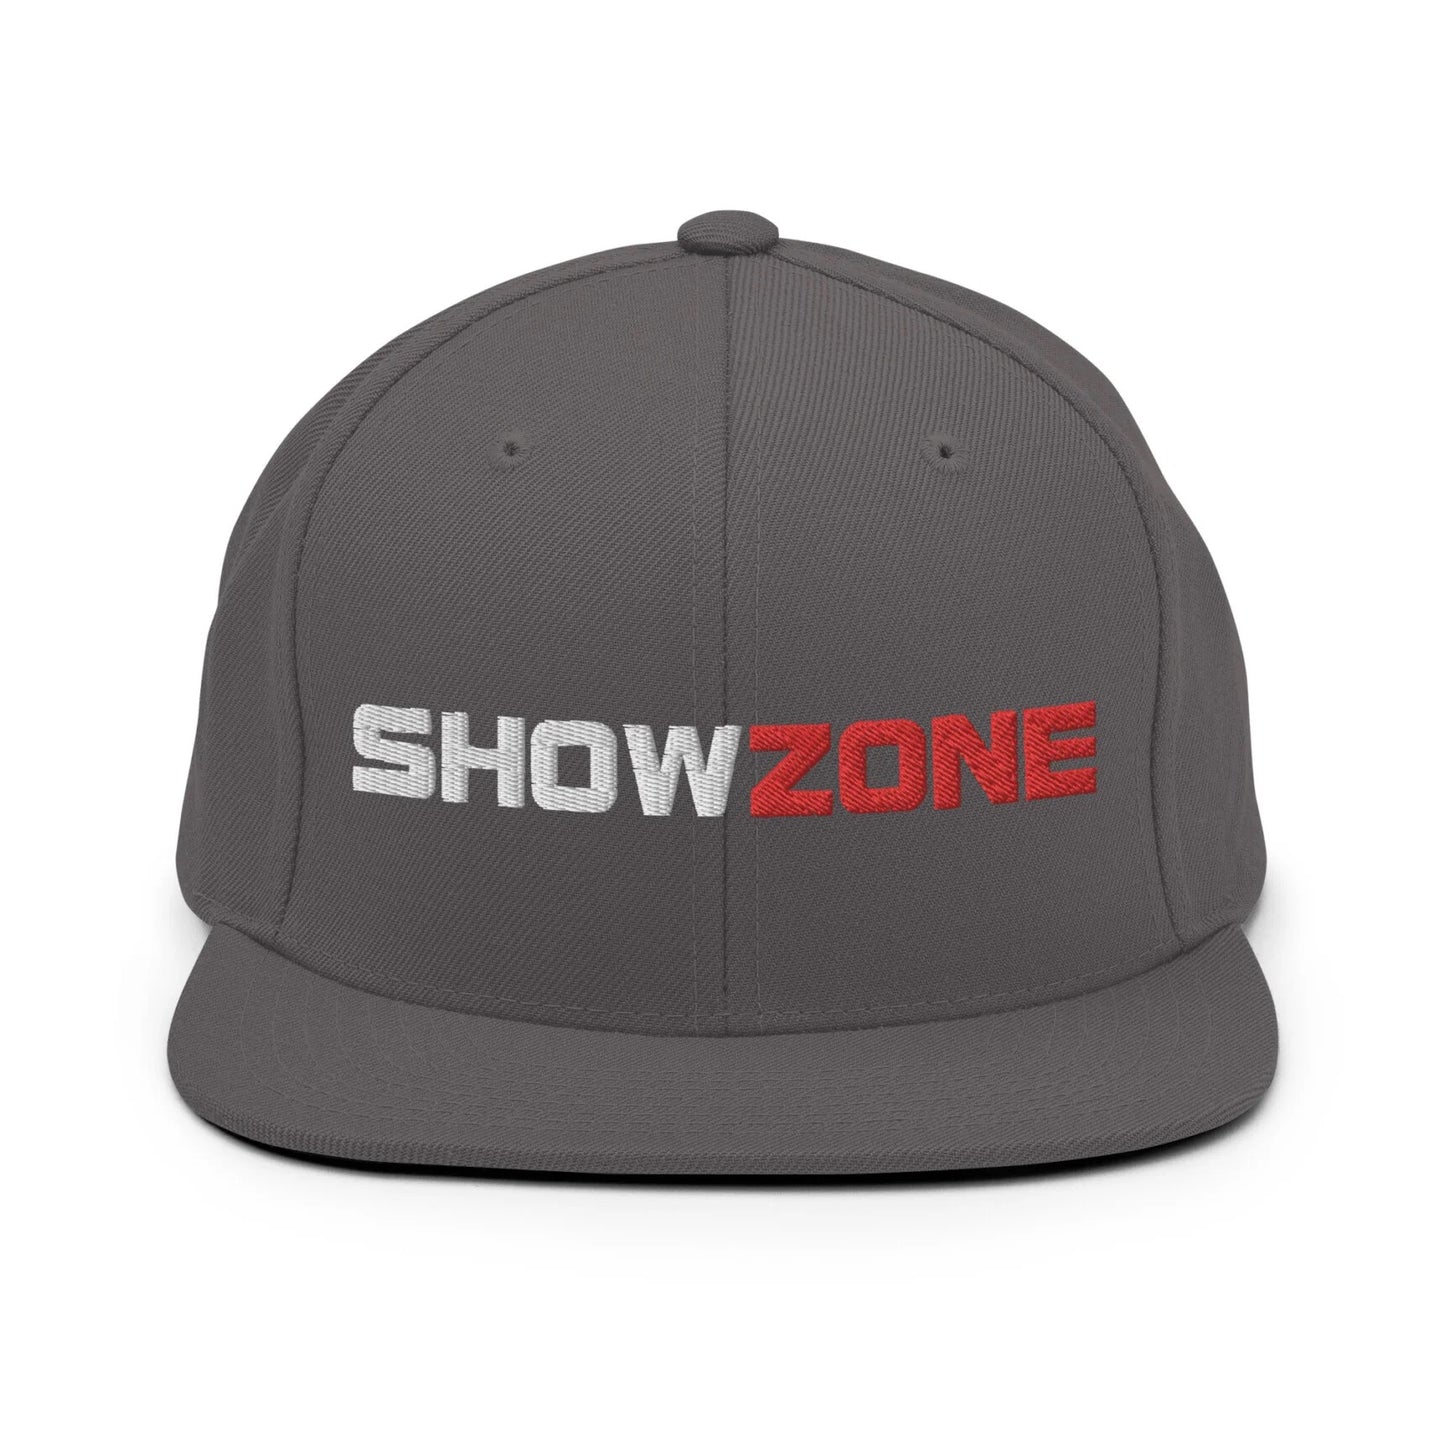 ShowZone snapback hat in dark grey with text logo